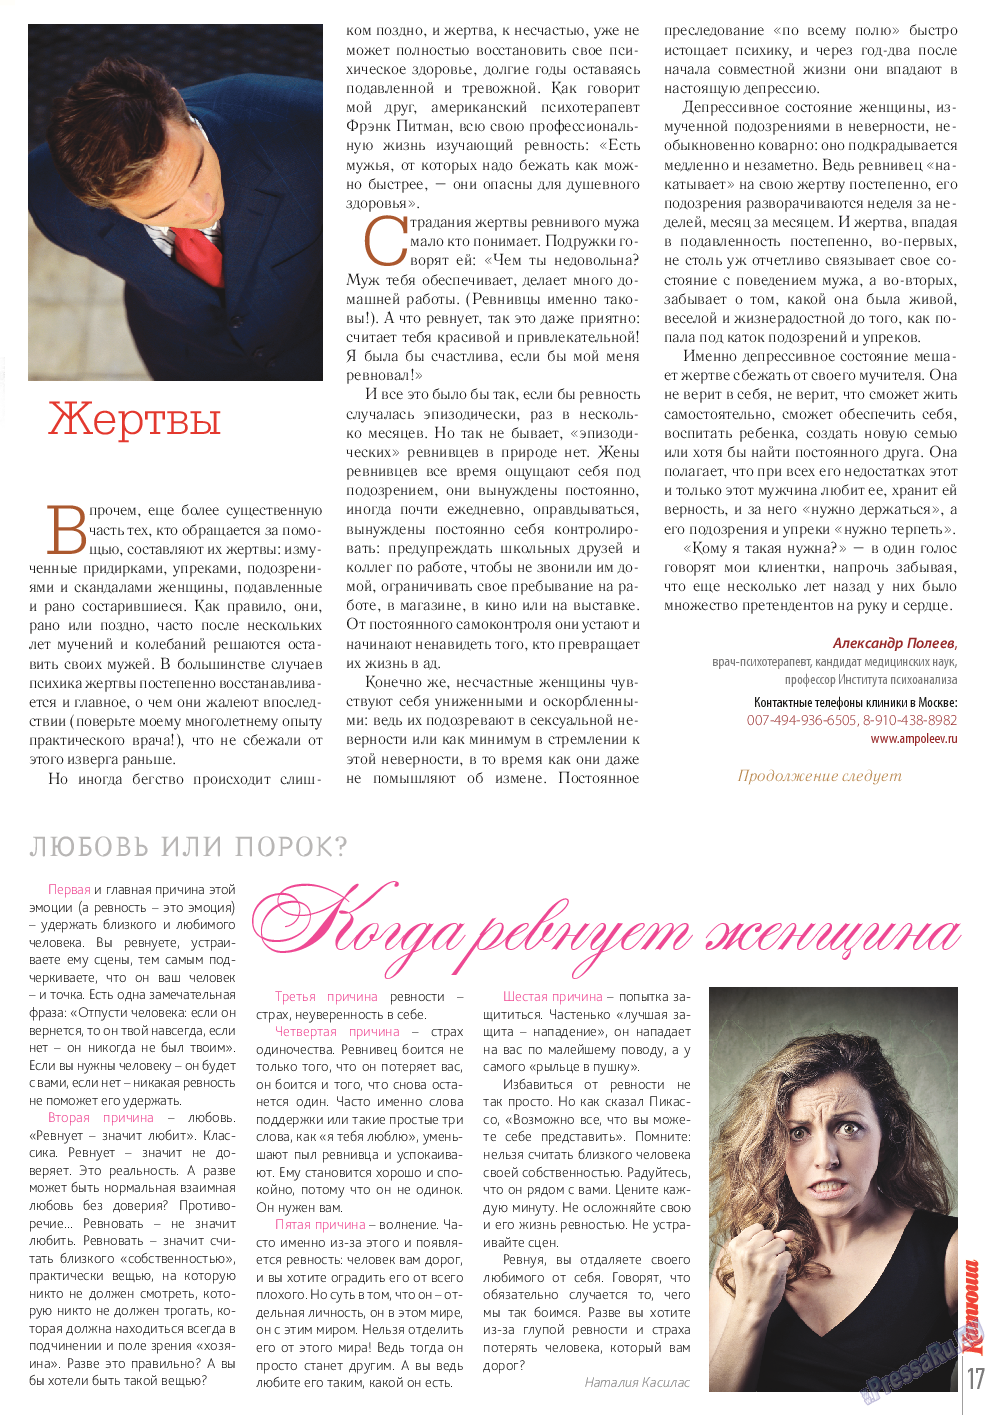 Катюша, журнал. 2014 №38 стр.17